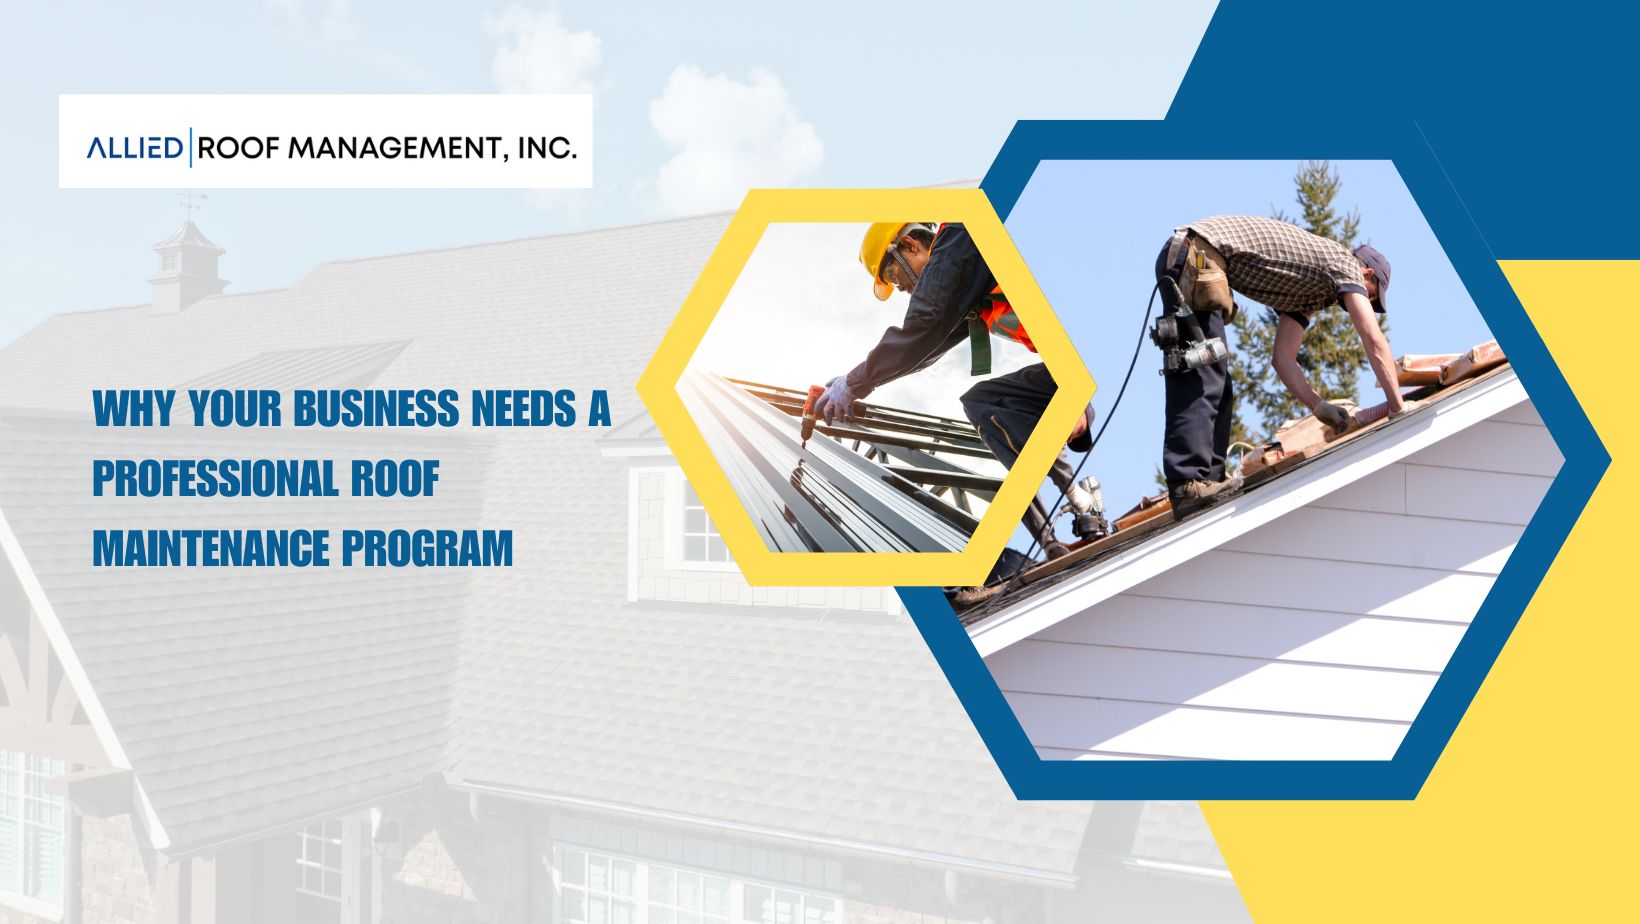 Roof Maintenance Program